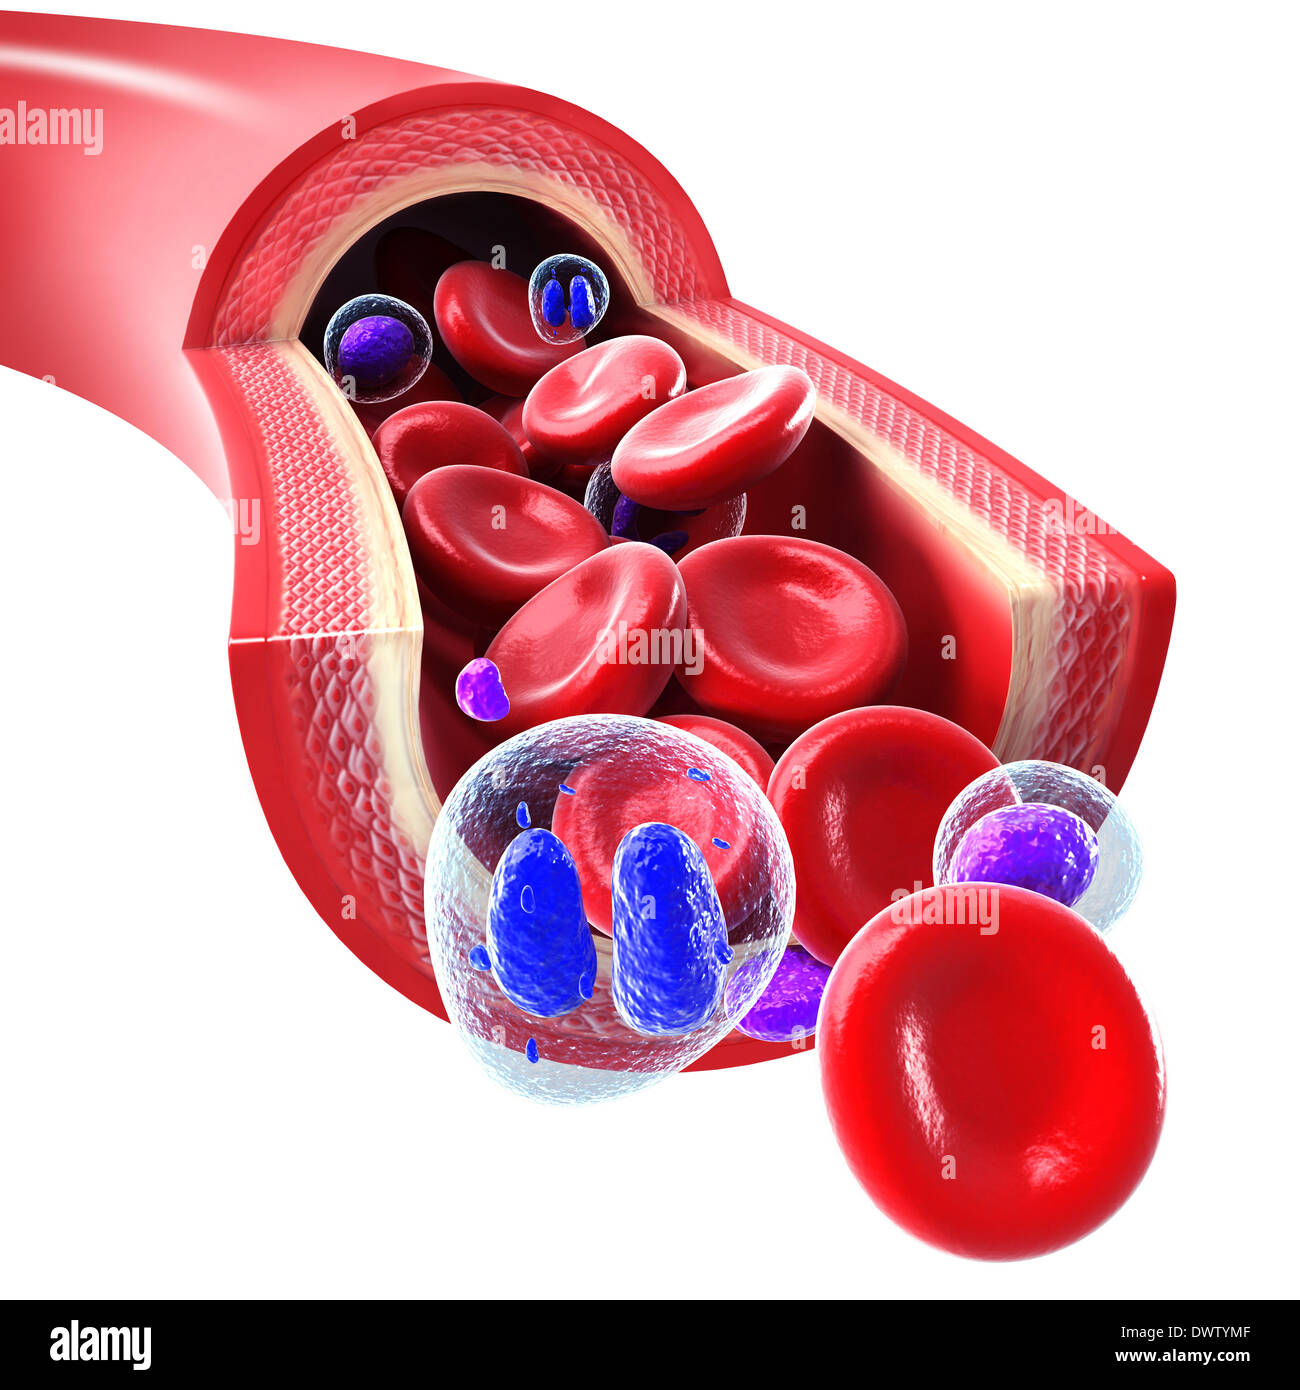 Blood circulation artery drawing Stock Photo